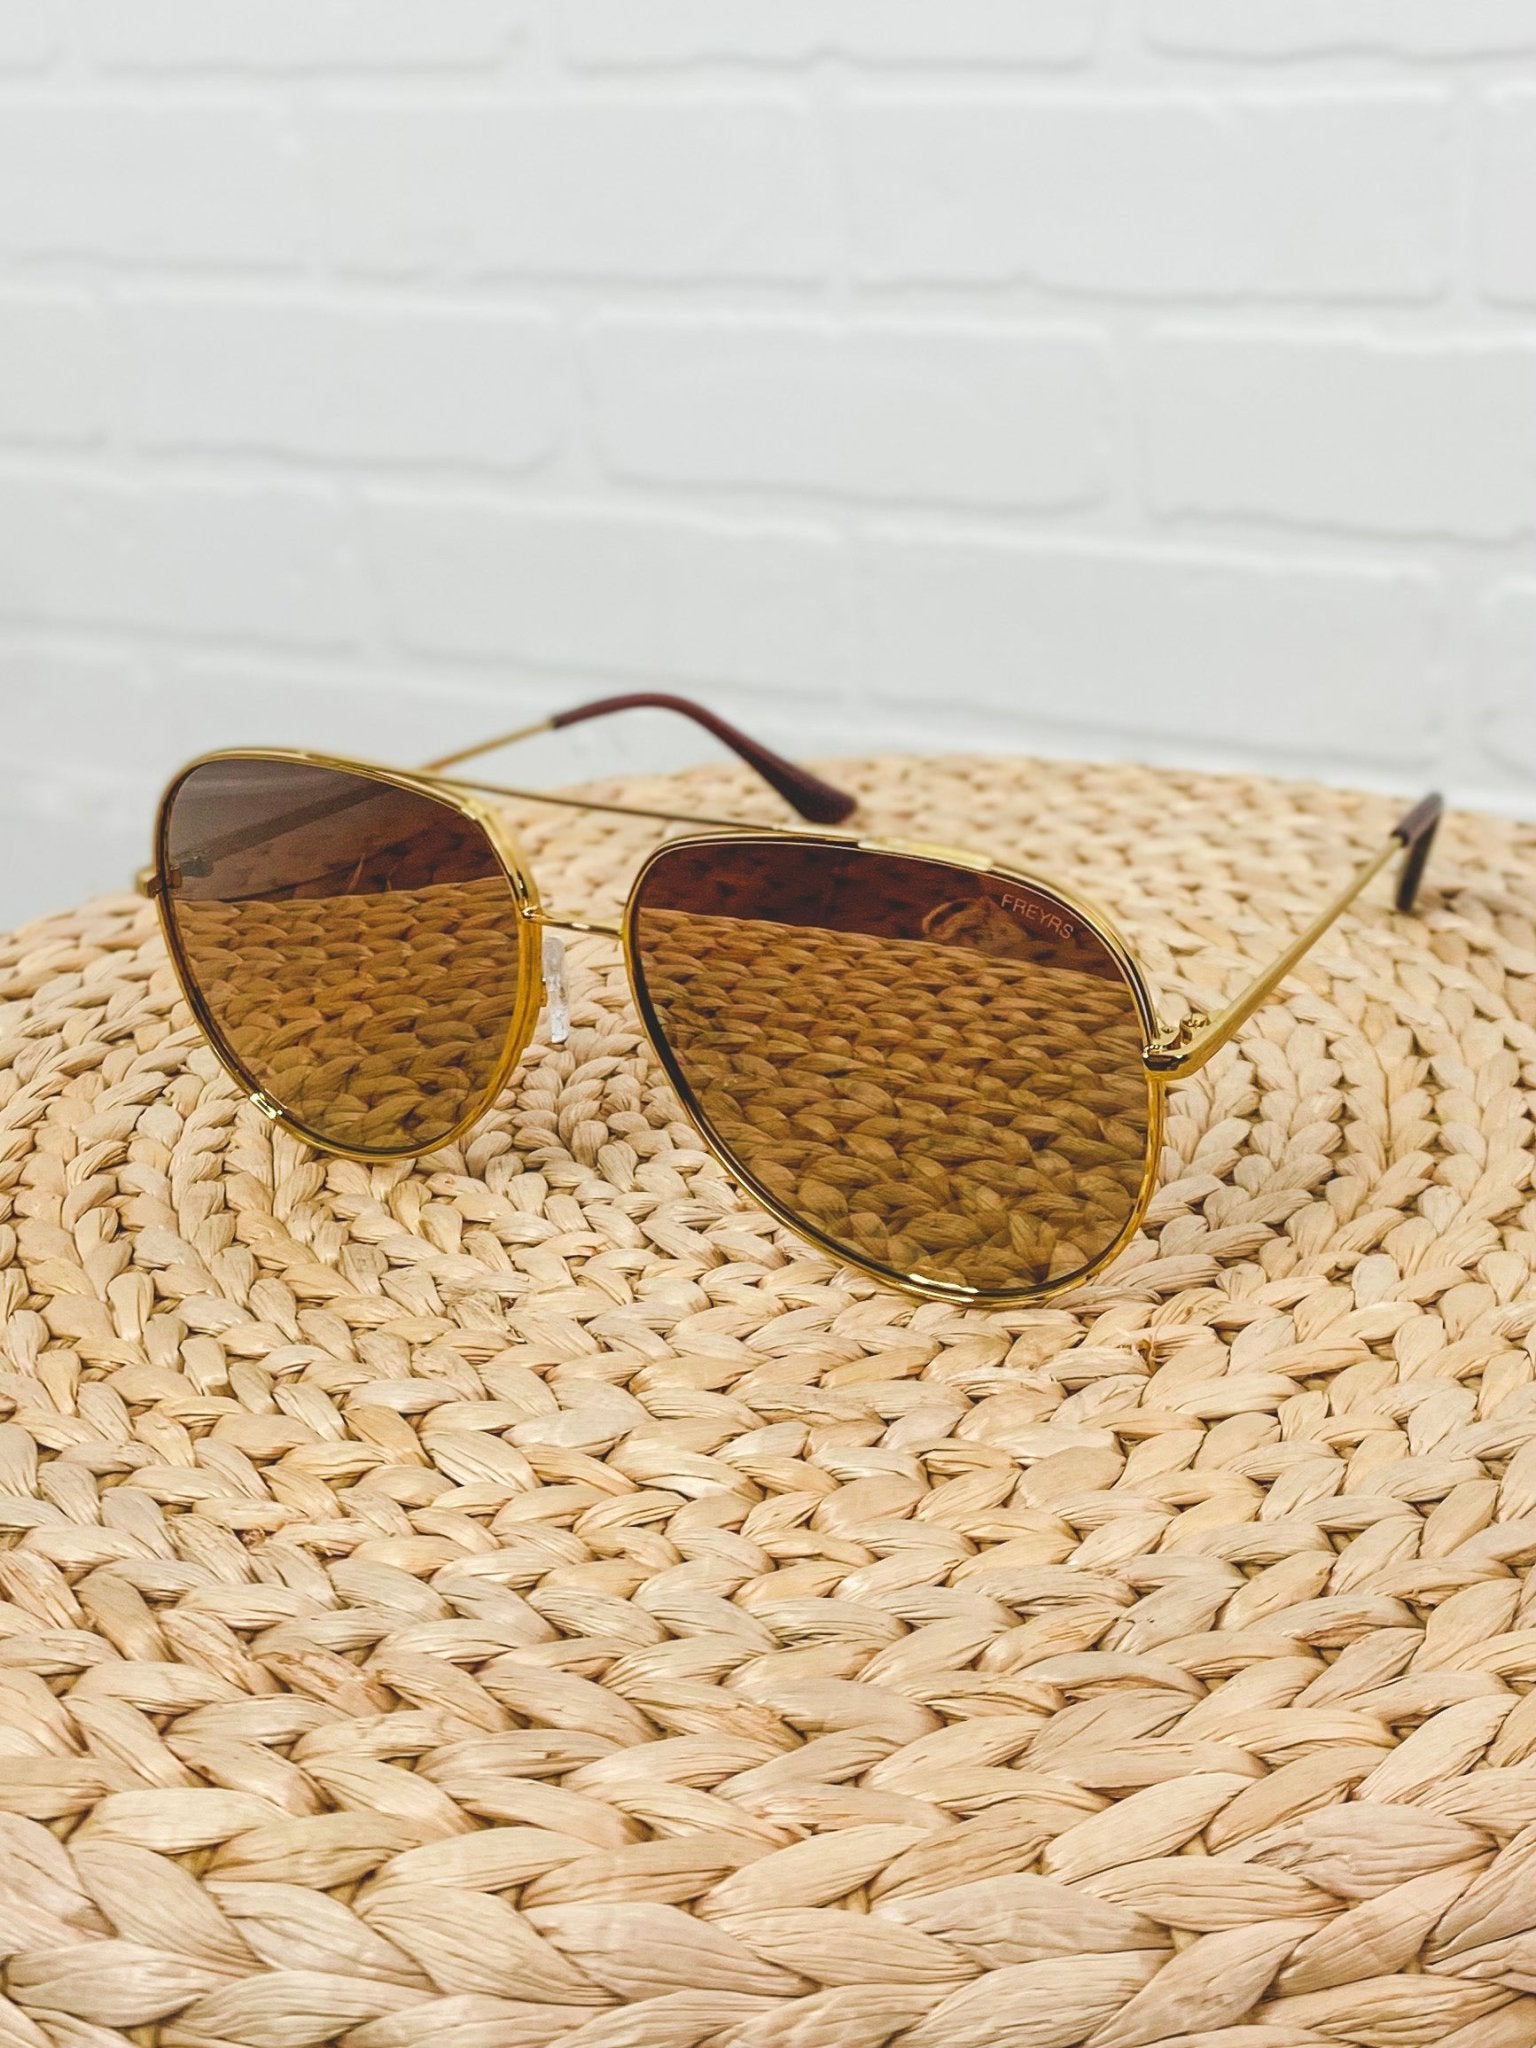 Freyrs Max sunglasses gold mirror - Stylish Sunglasses - Trendy Glasses at Lush Fashion Lounge Boutique in Oklahoma